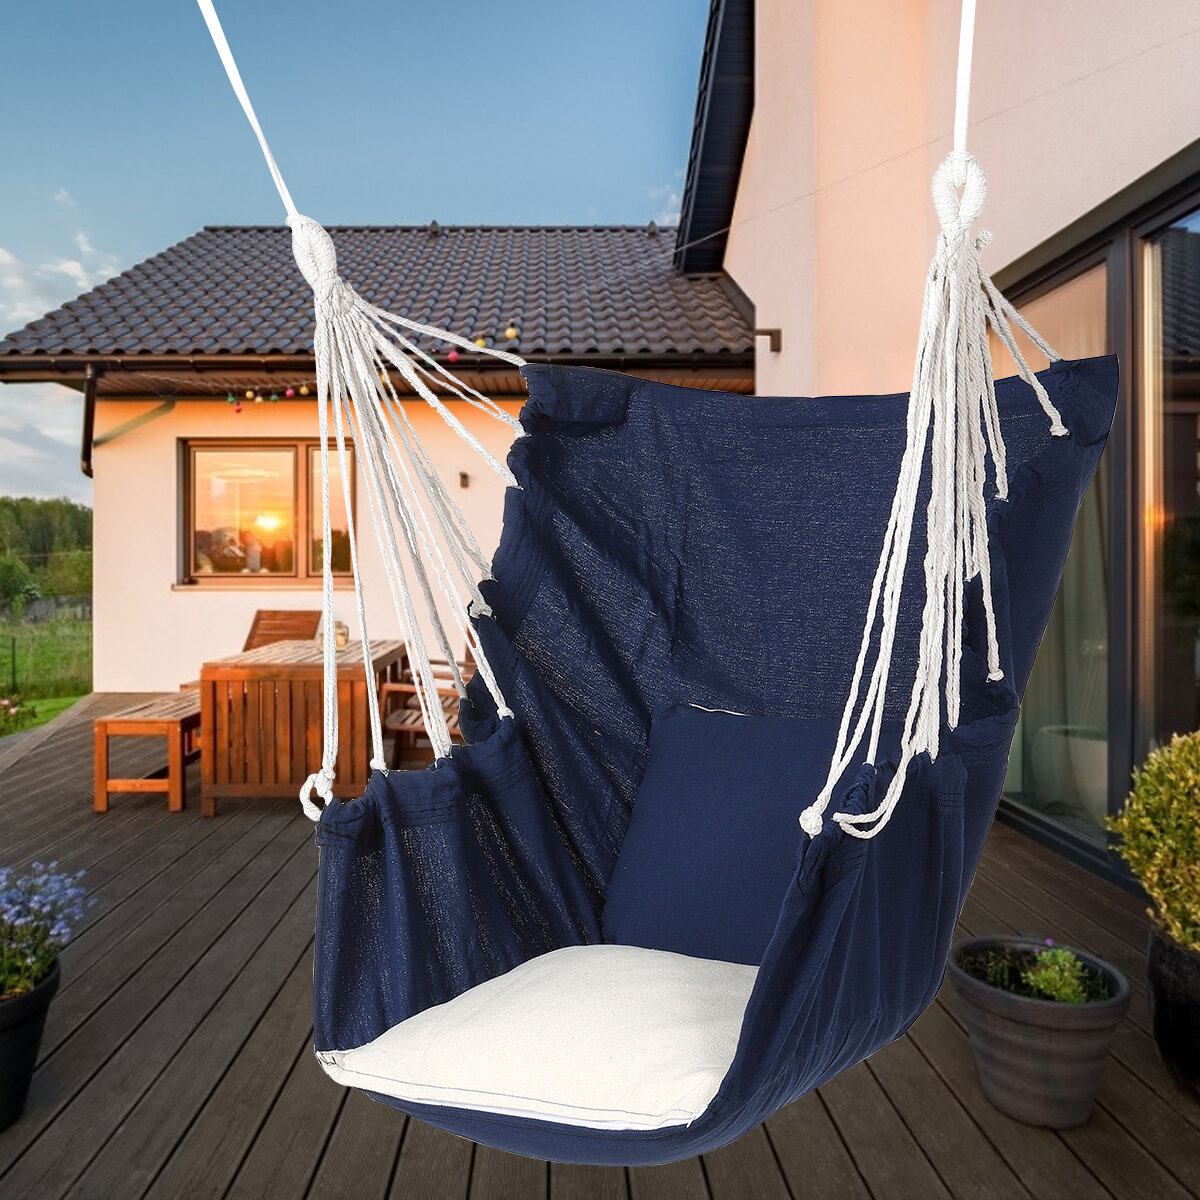 

Hanging Rope Chair Max Load 200KG Hammock Swing Seat Indoor Outdoor Patio Porch Garden Supplies